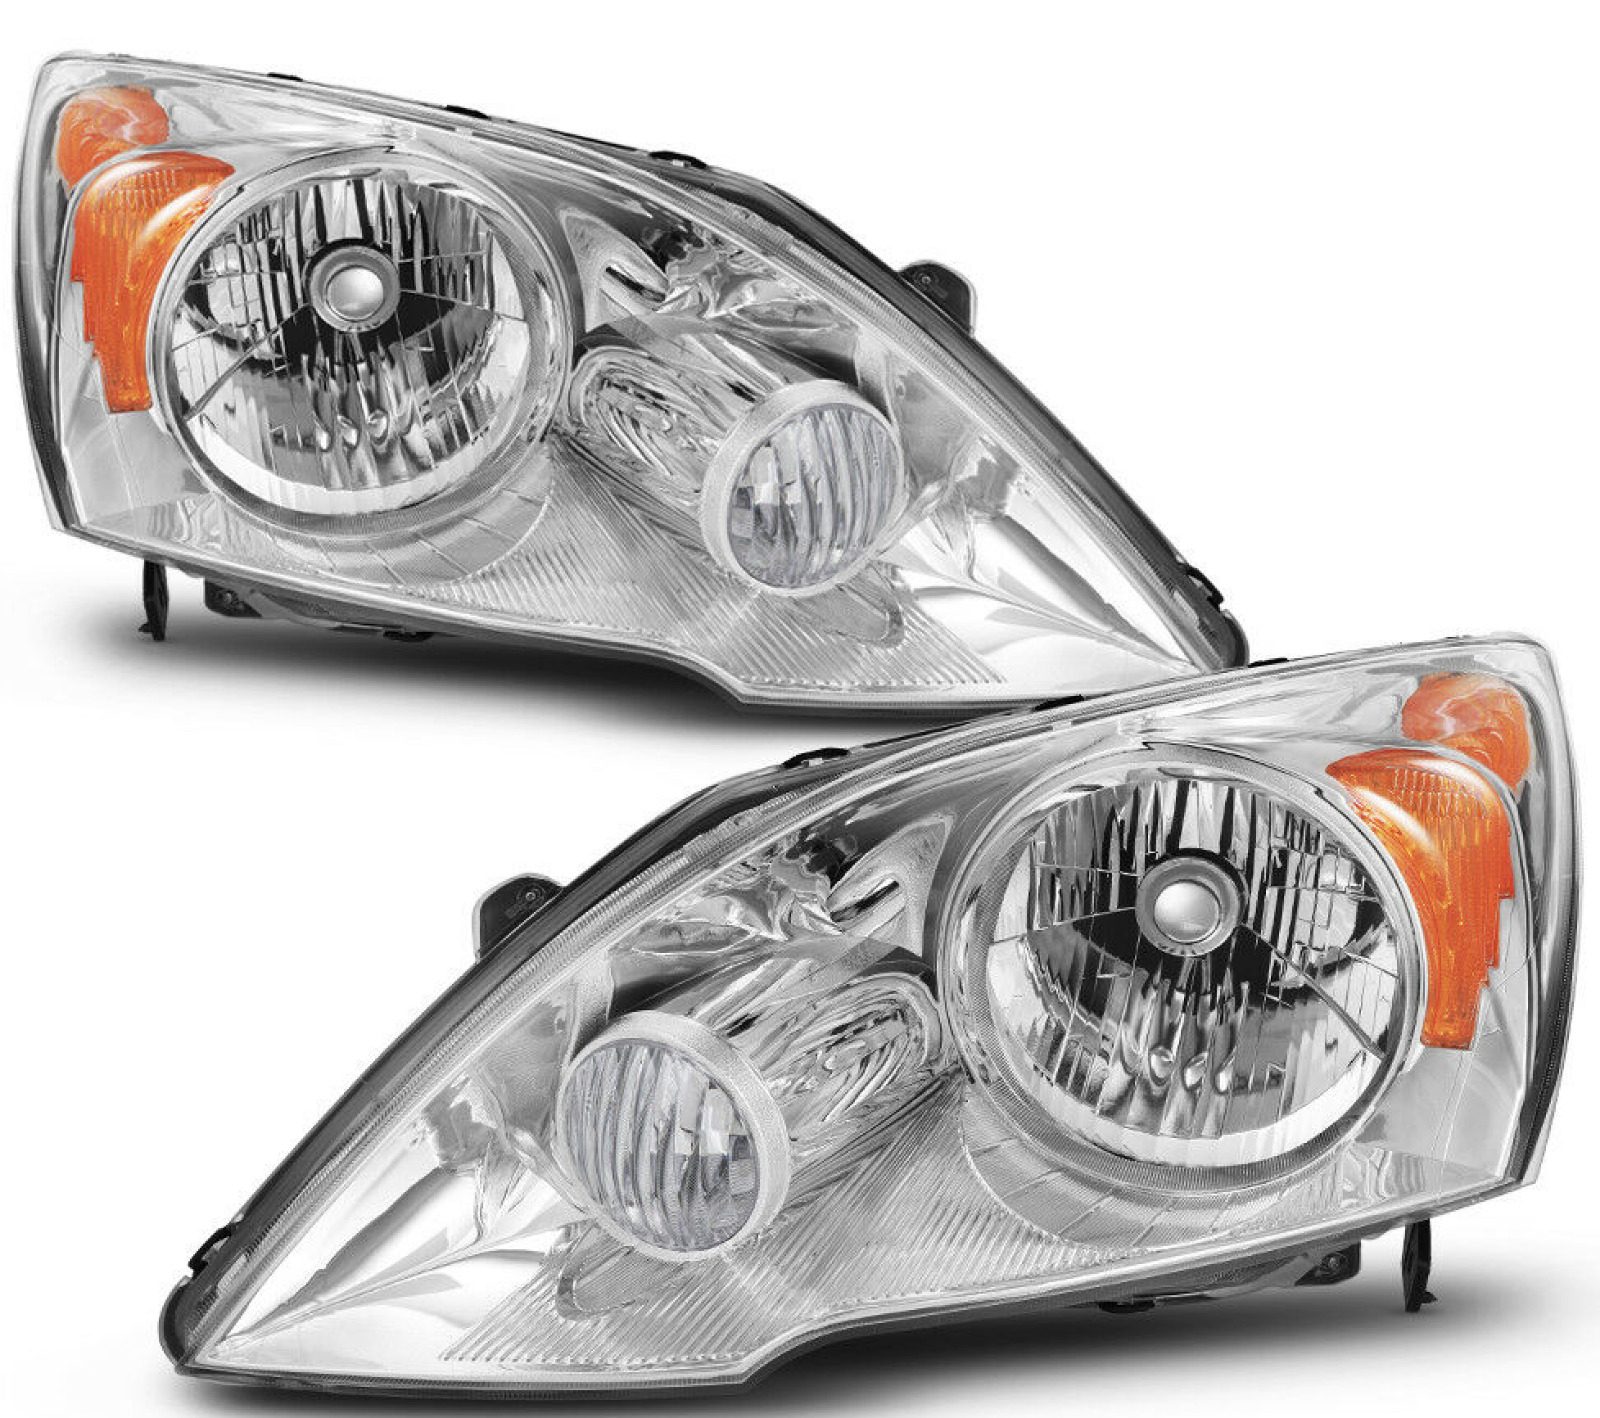 New Pair Set for 07-11 Honda CRV CR-V Headlights Headlamps Left Right 2007-2011